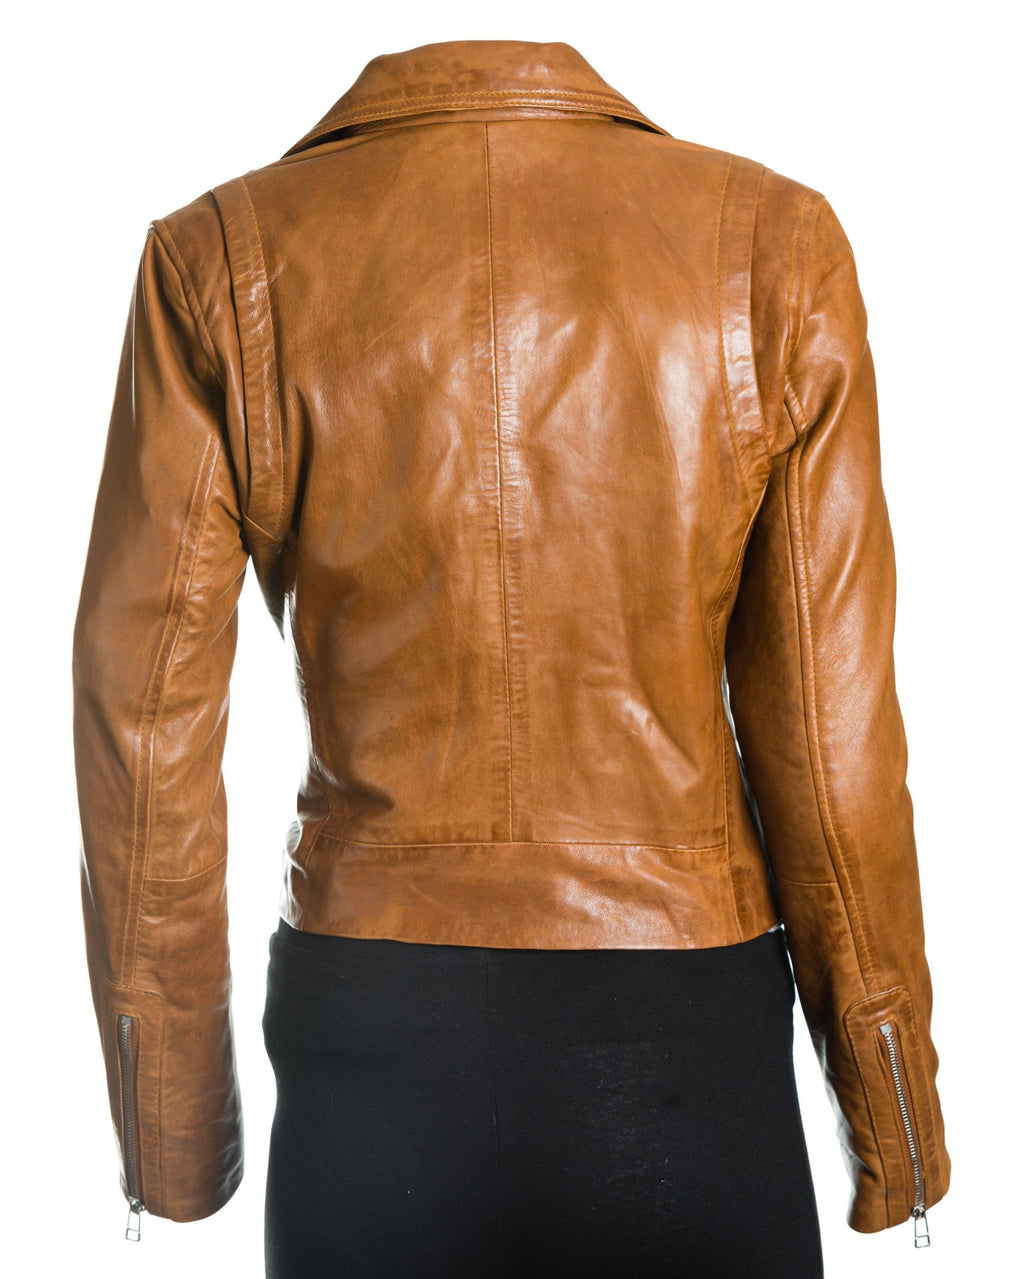 Women's Tan Simple Asymmetric Leather Biker Jacket: Brigida